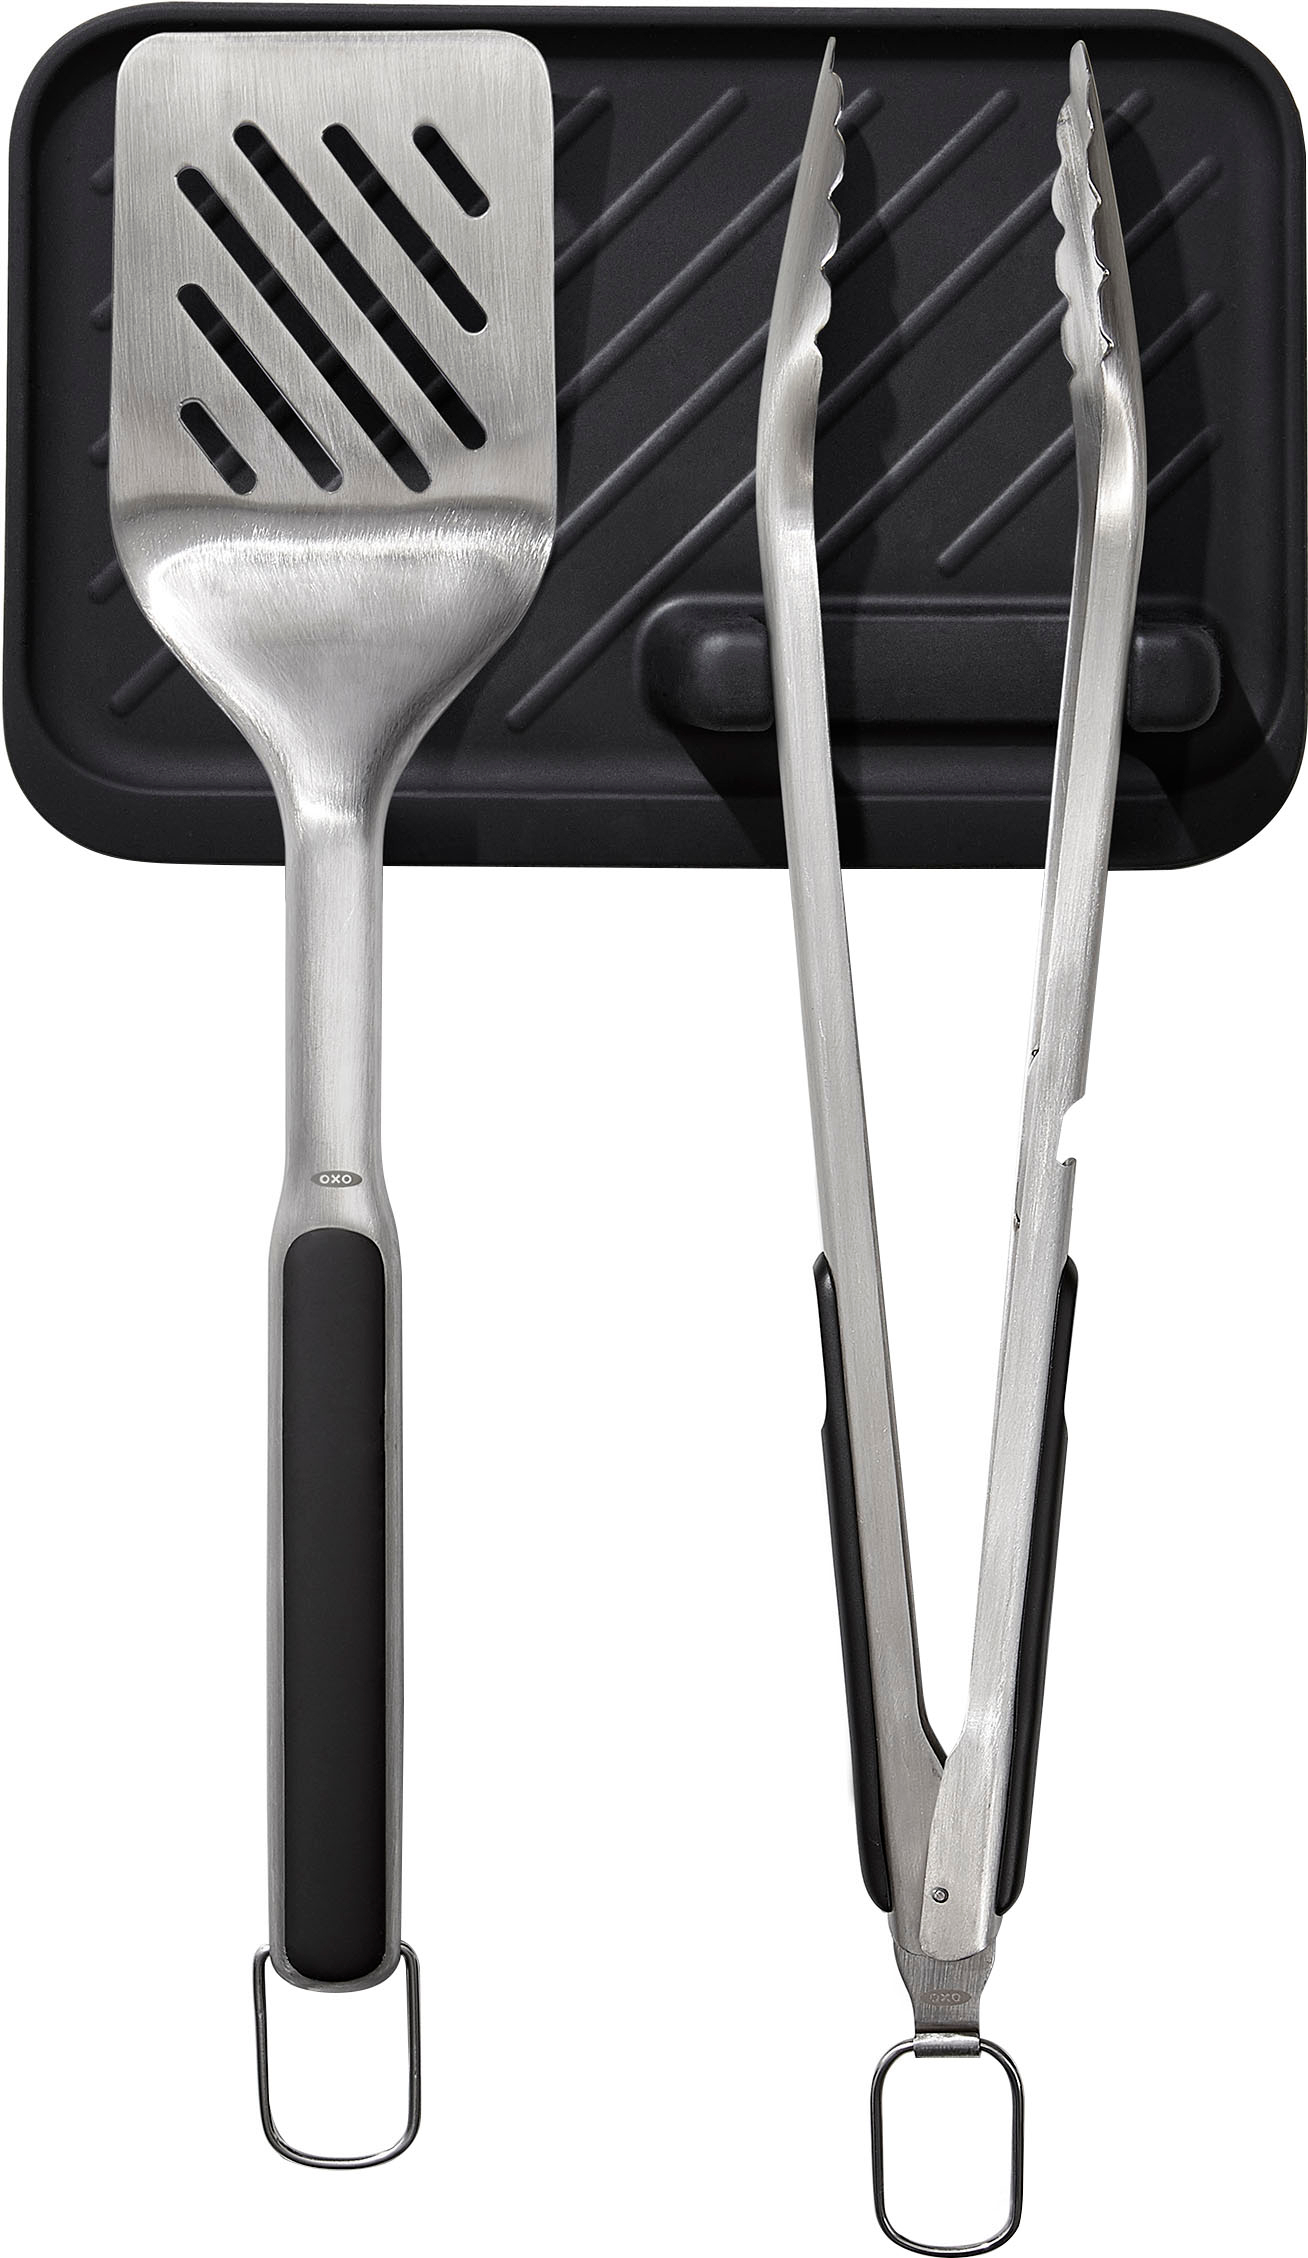 OXO Good Grips Spatula Set Review: Three Tools, Many Uses